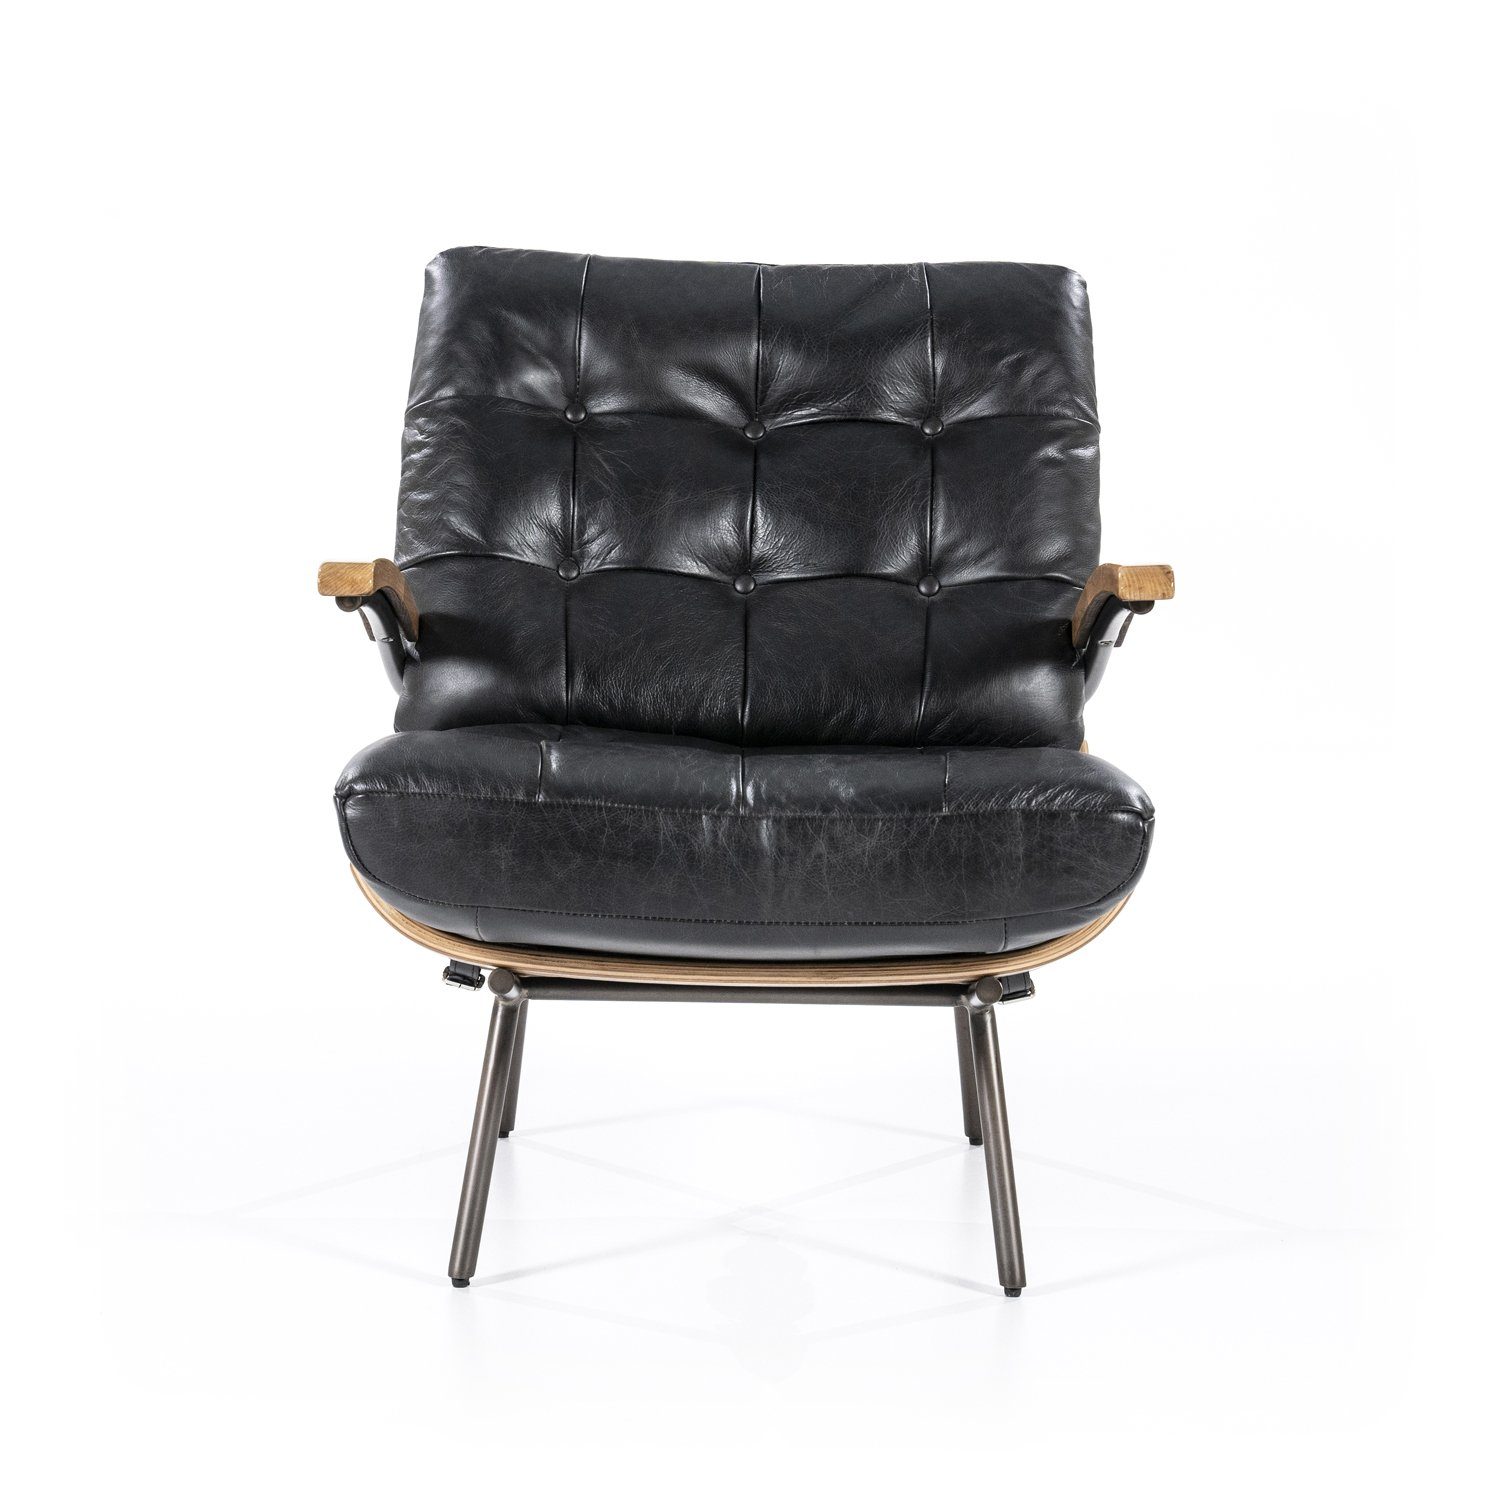 Sessel hochwertigem Maison NICOLAS Ledersessel Loungesessel Leder Vintage, schwarz Java-Leder aus ESTO